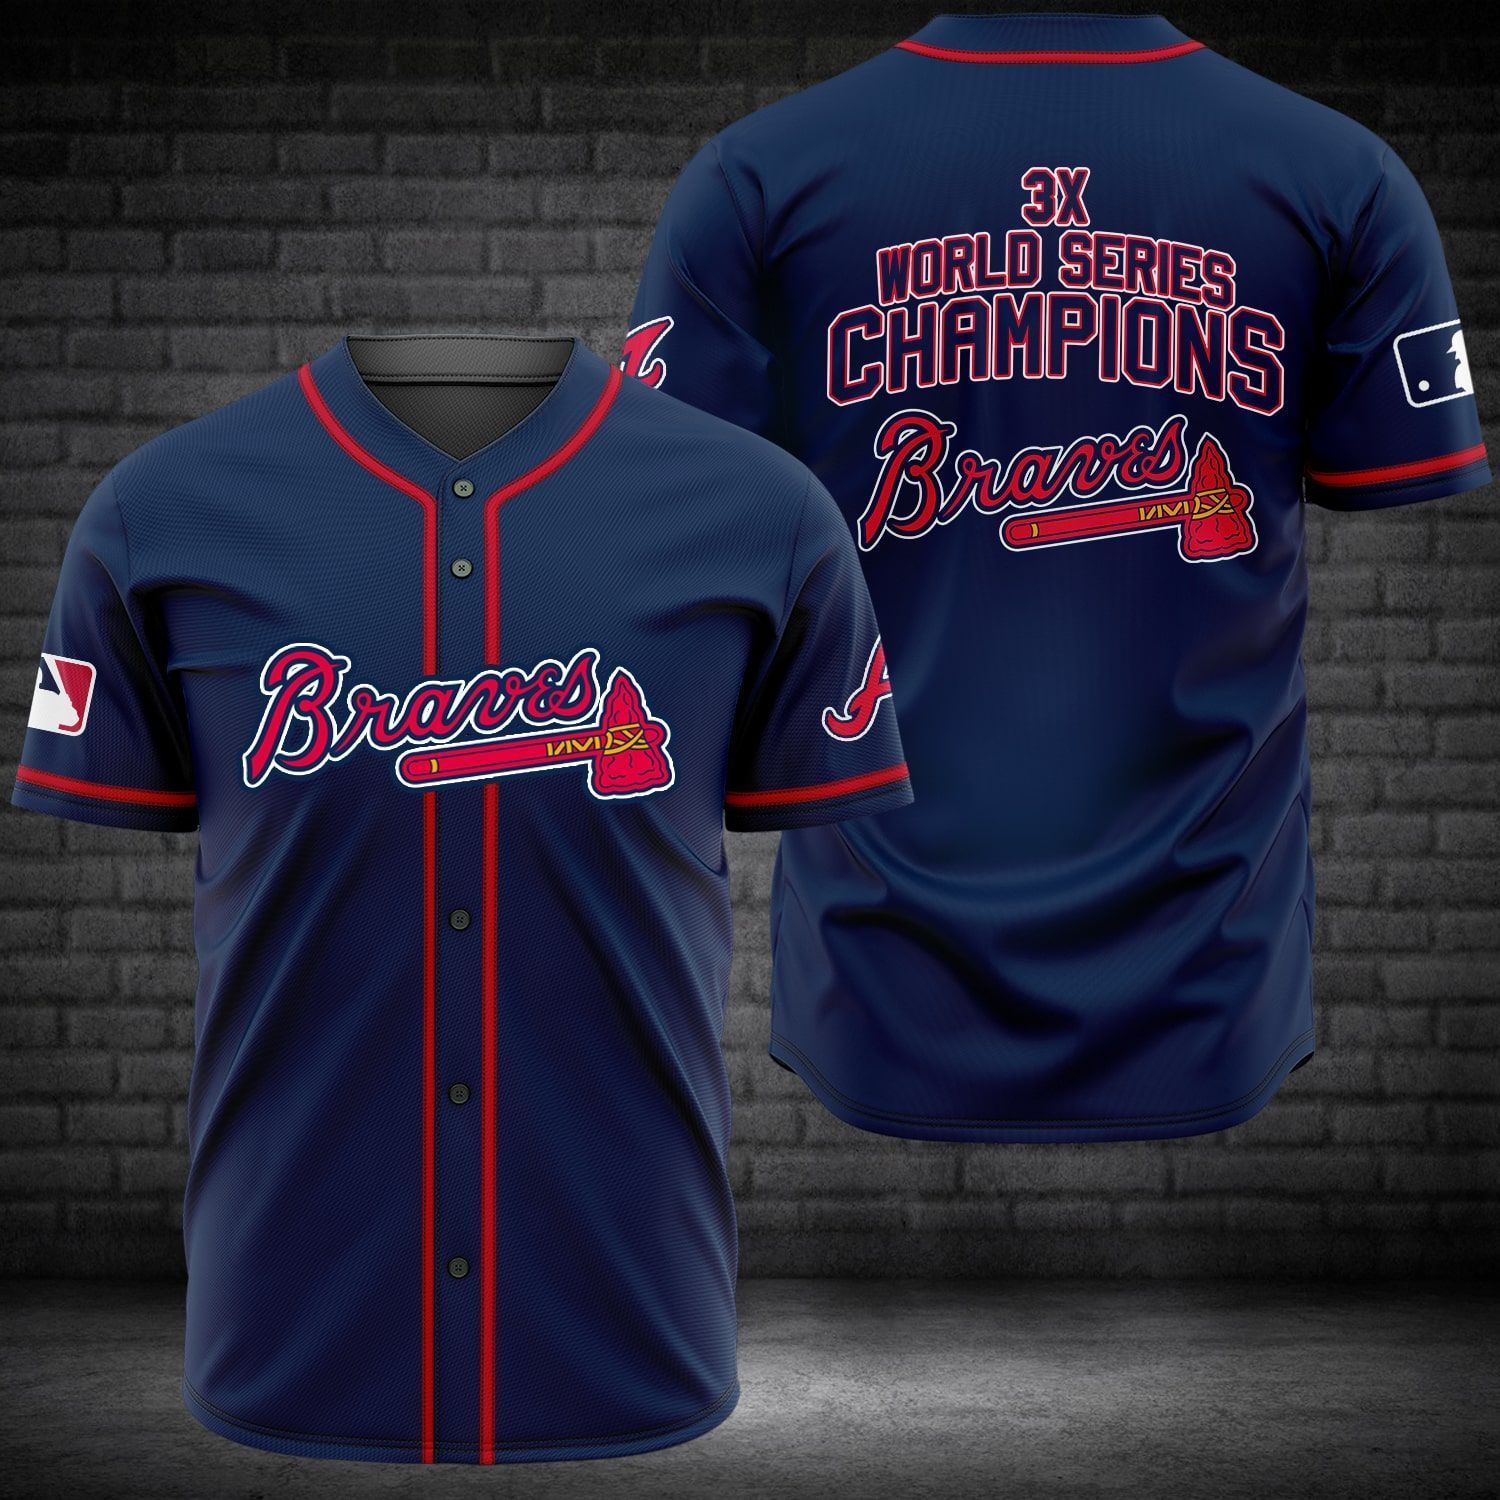 Atlanta Braves MLB 3x World Series Champions baseball jersey shirt – Saleoff 251221